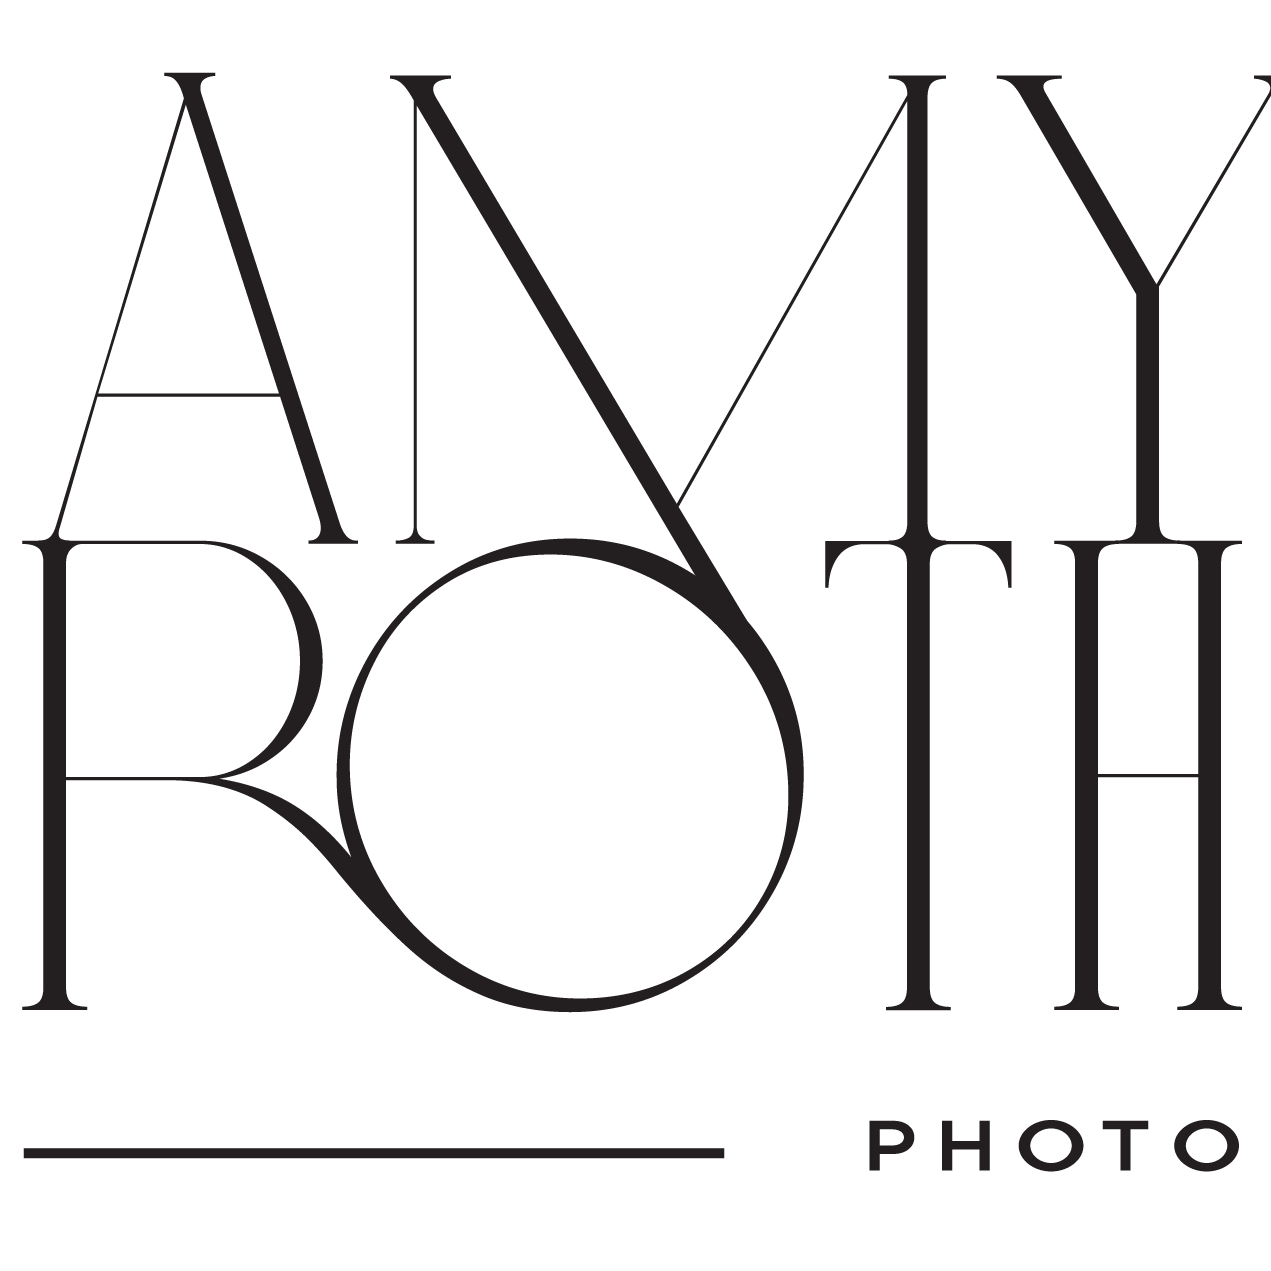 Amy Roth Photo’s Substack